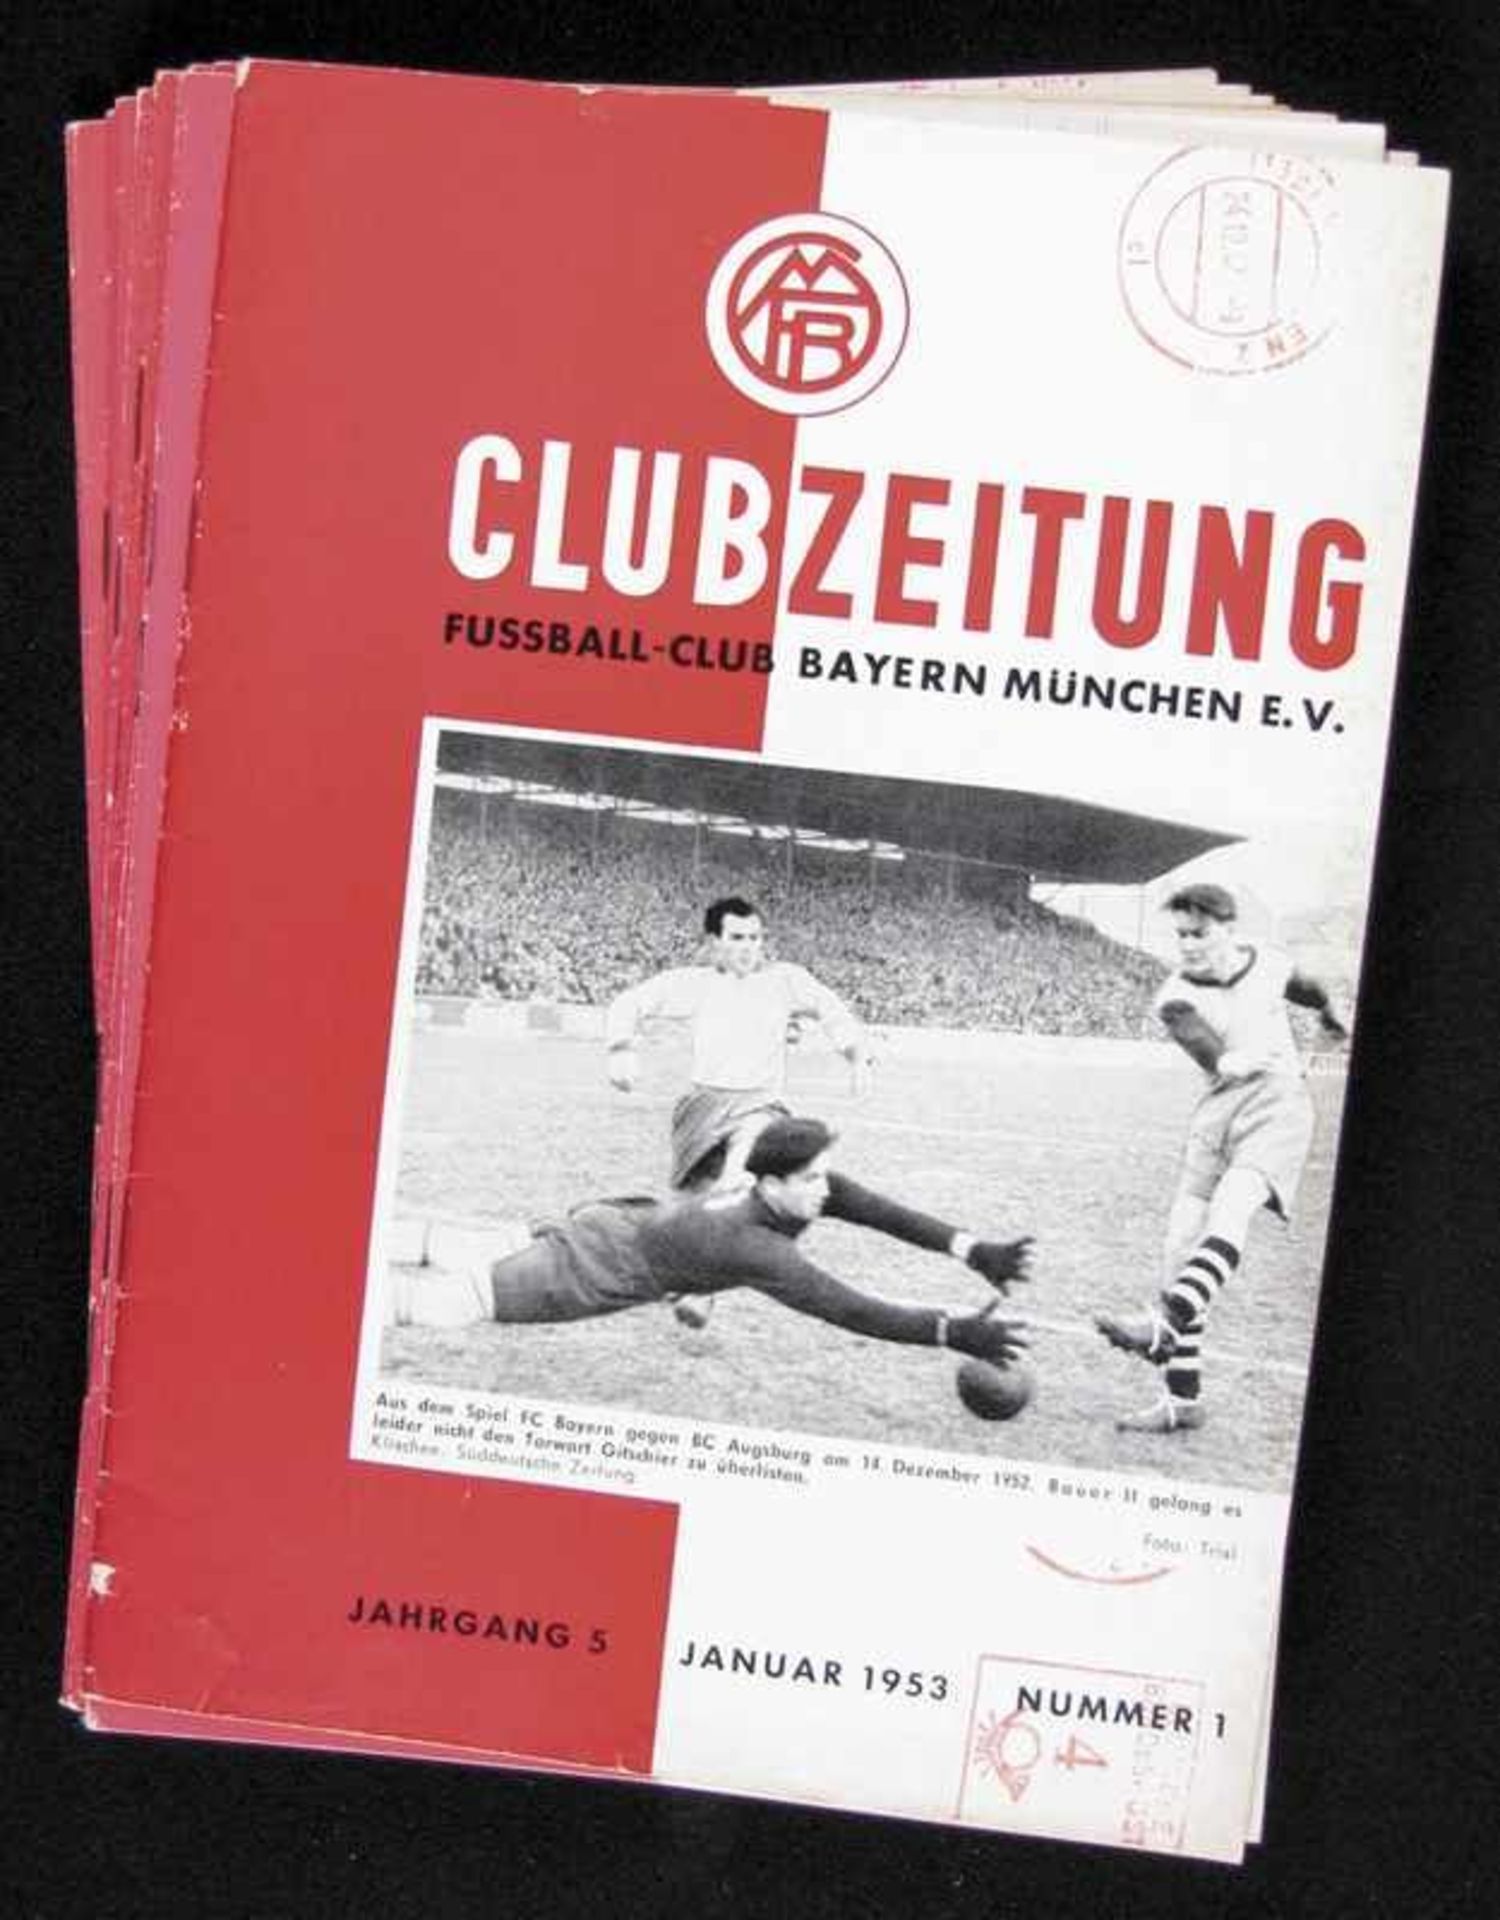 F.C. Bayern München Clubmagazin 1953. - München-Clubzeitung 53 - Clubzeitung des F.C. Bayern München